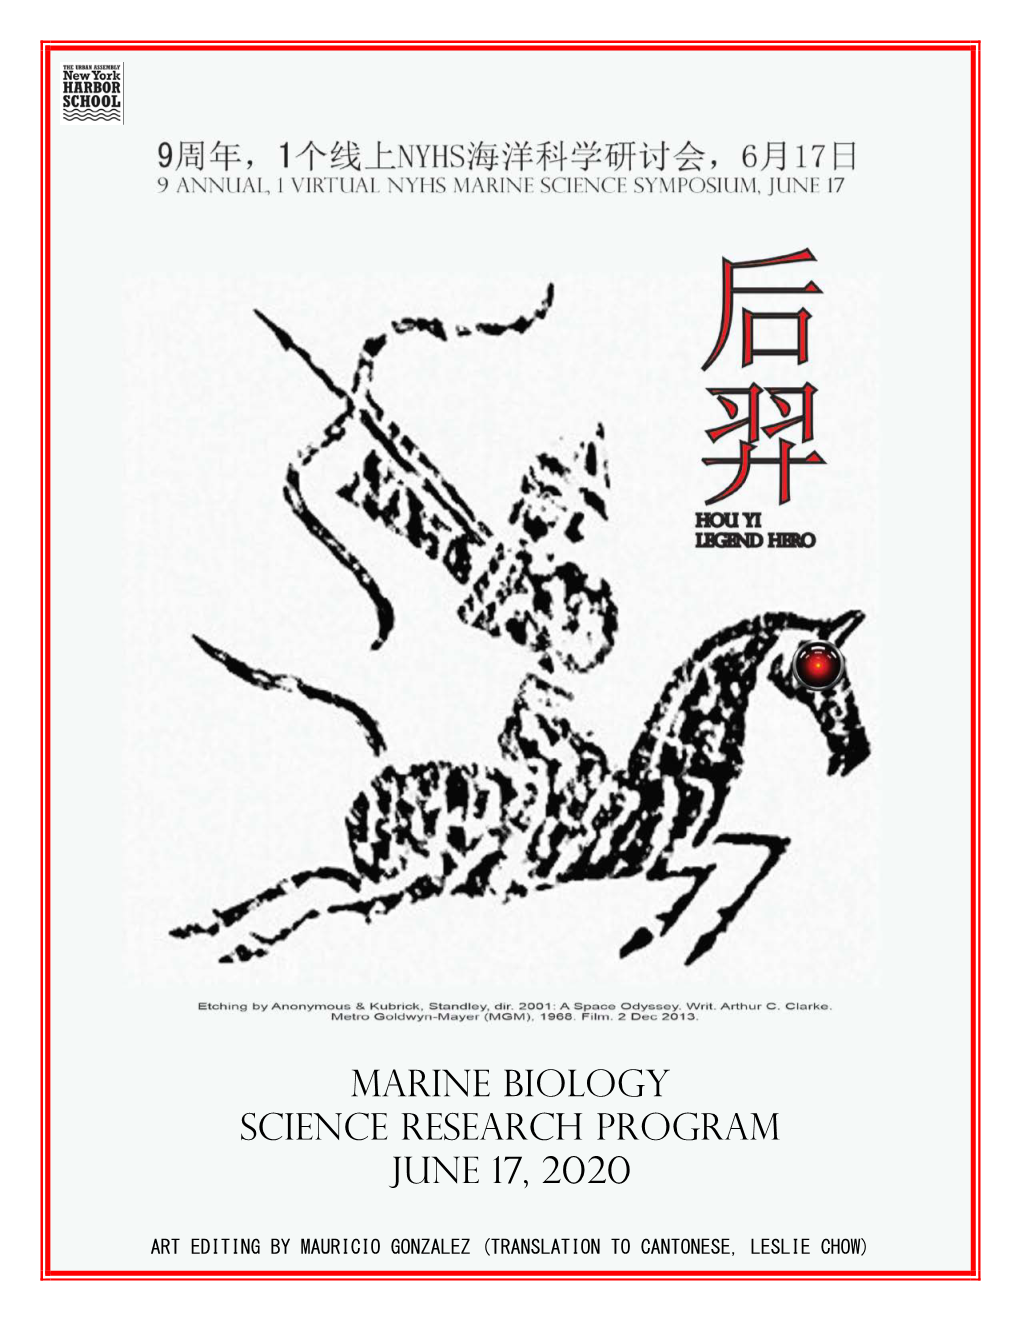 Marine Biology Science Research Program June 17, 2020